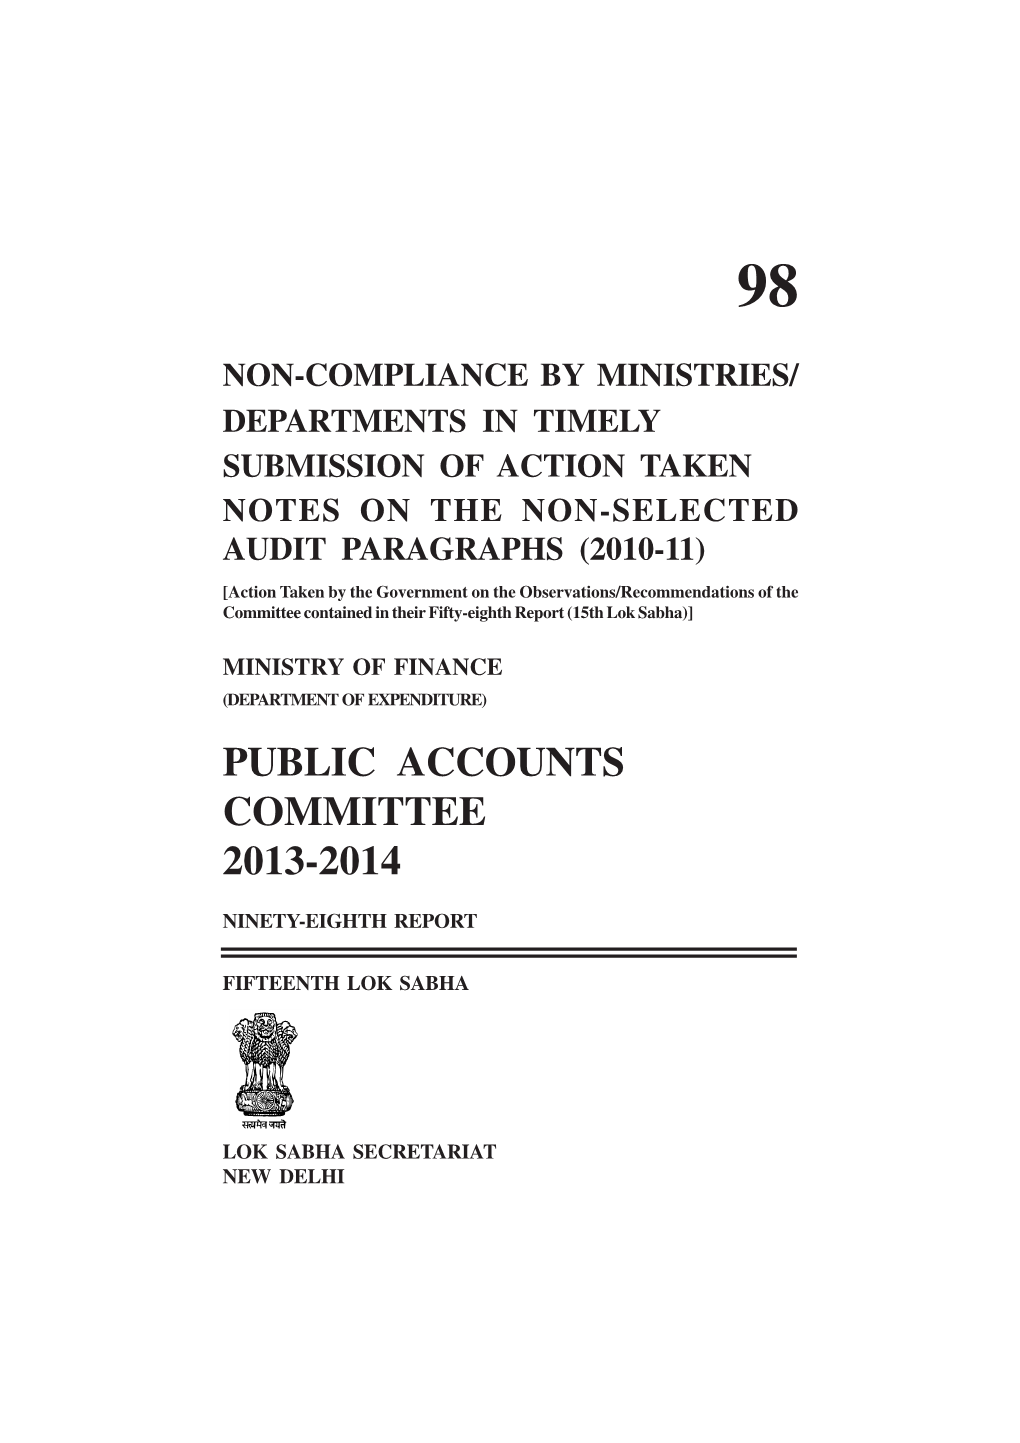 Public Accounts Committee 2013-2014